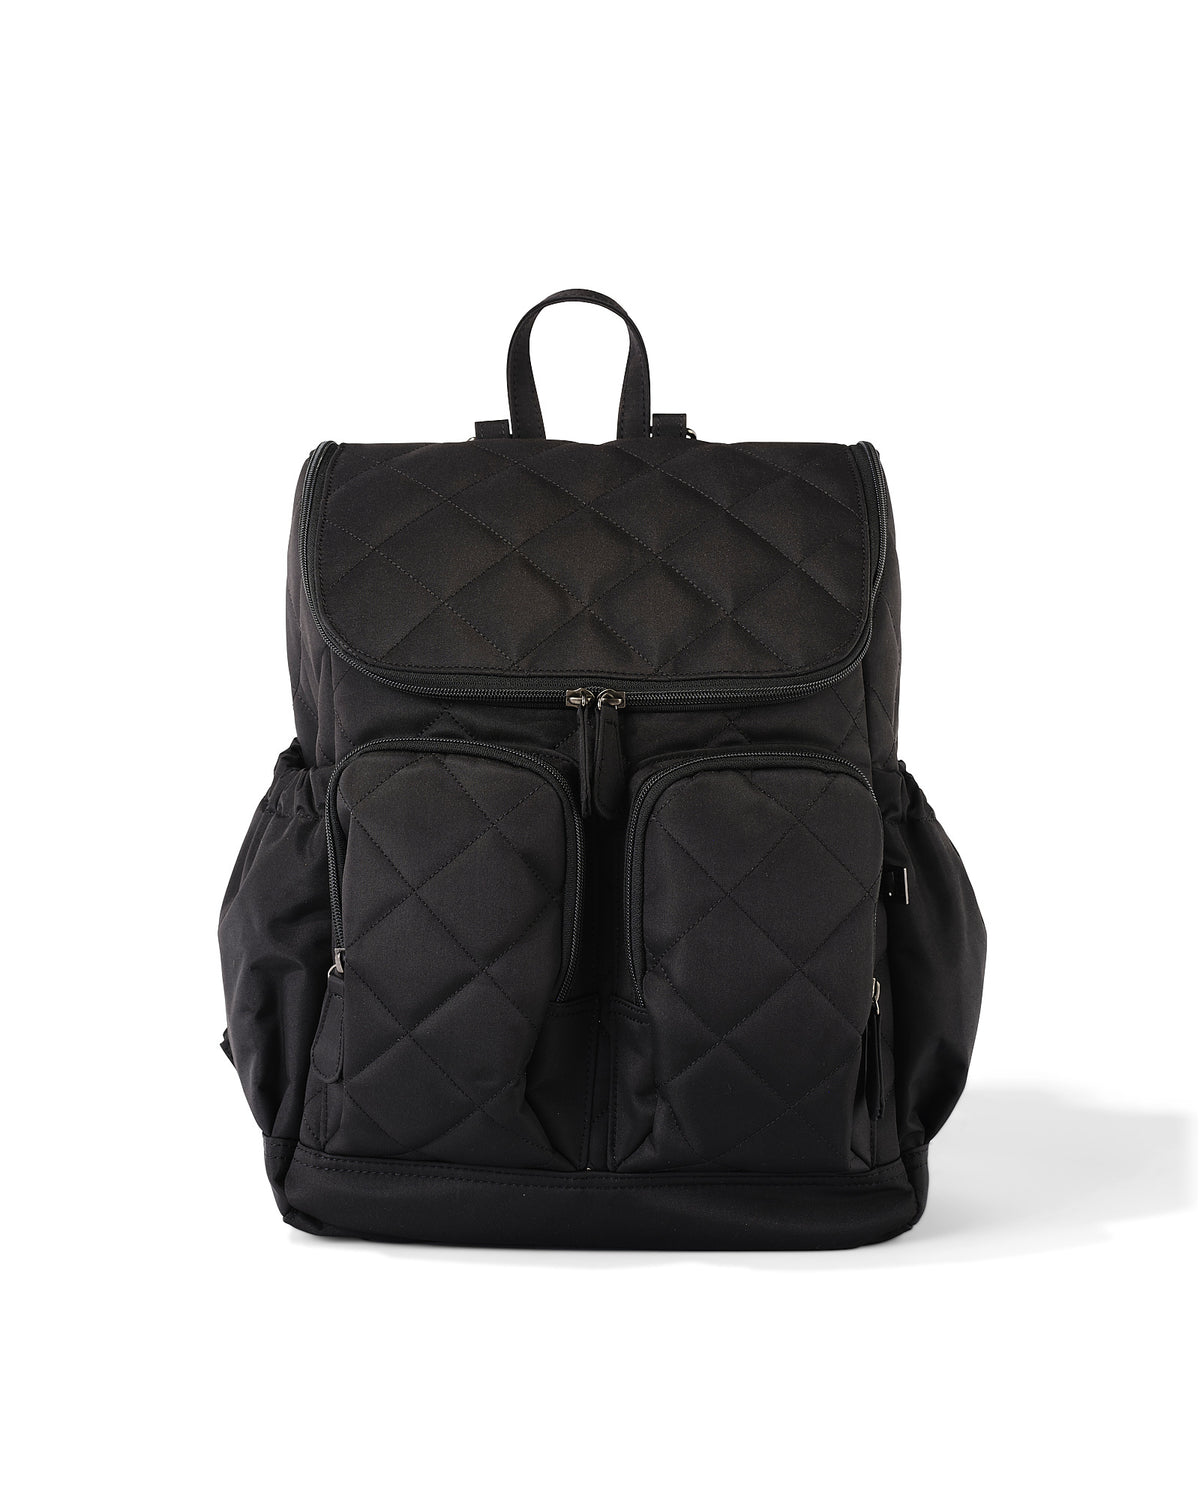 Nappy Backpack - Black Quilt - Child Boutique